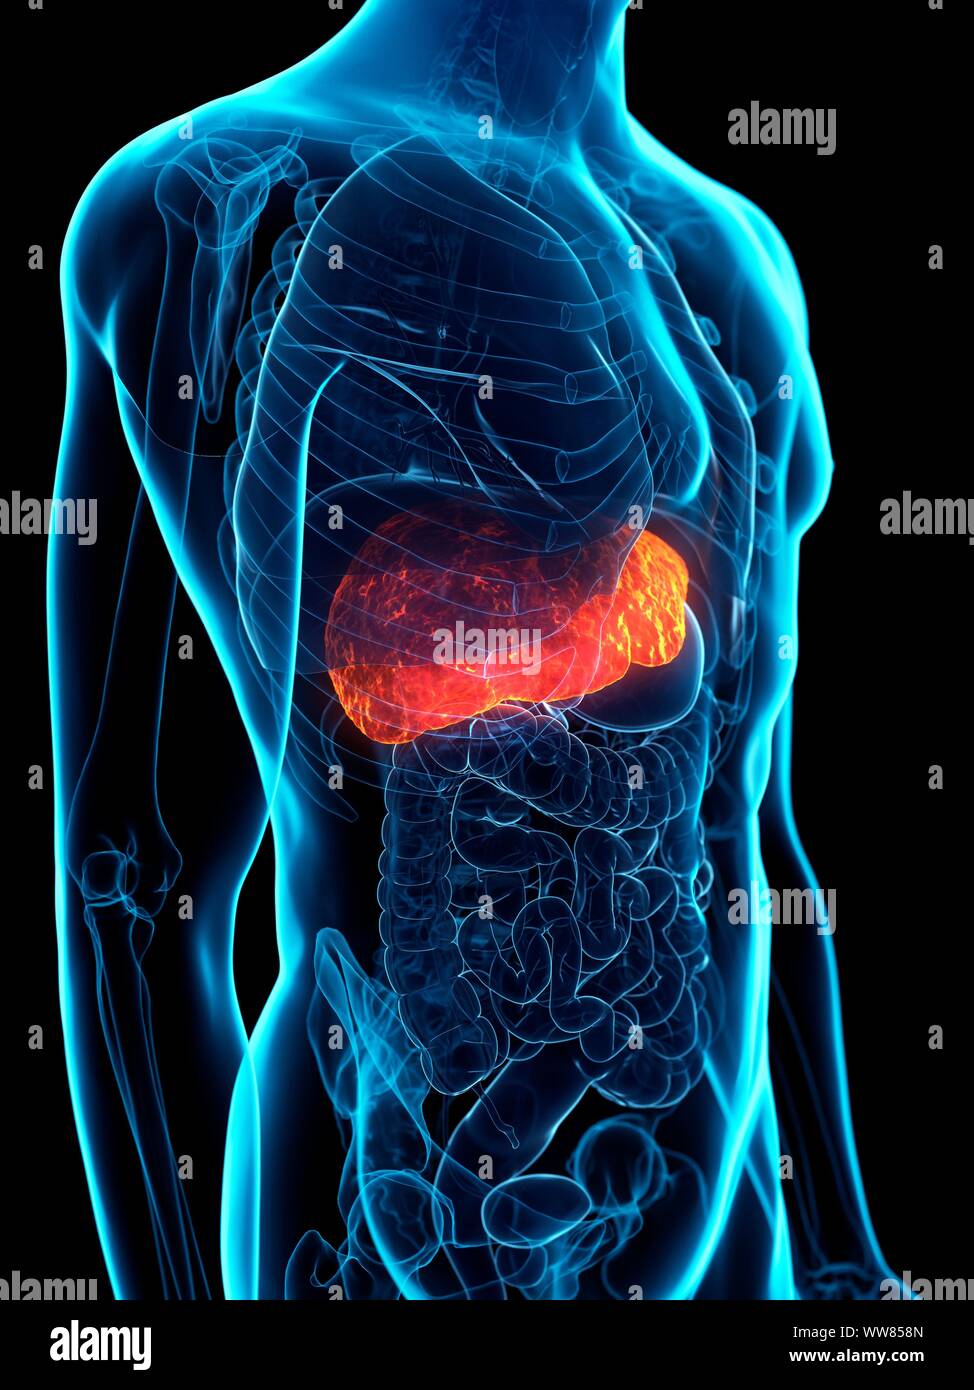 Diseased liver, conceptual illustration Stock Photo - Alamy